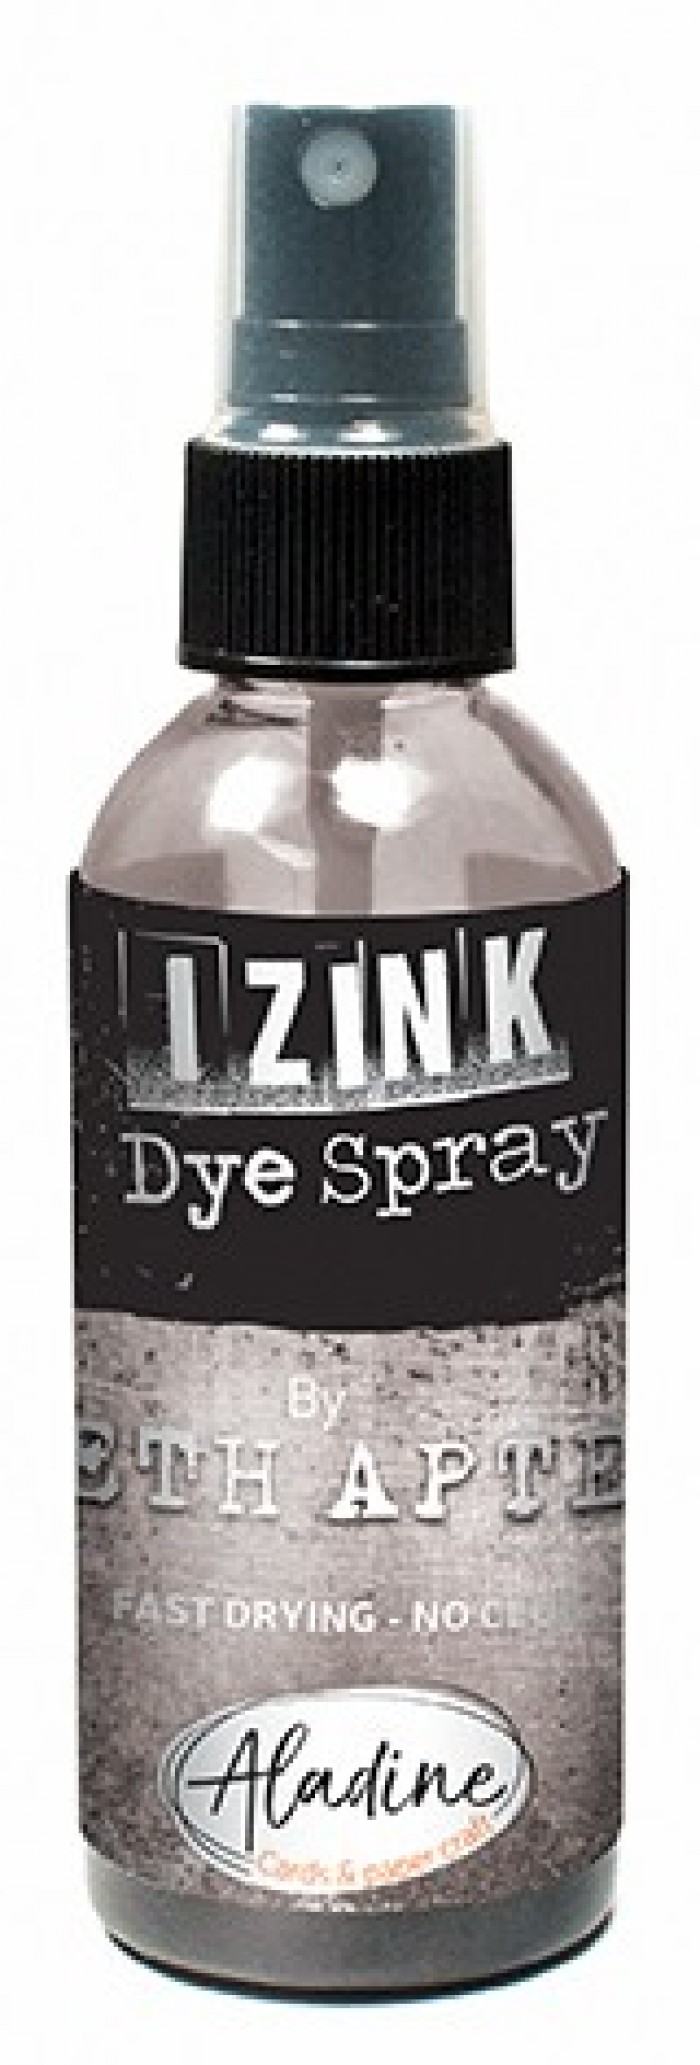 Nacre - Pearl Izink Dye Spray by Seth Apter